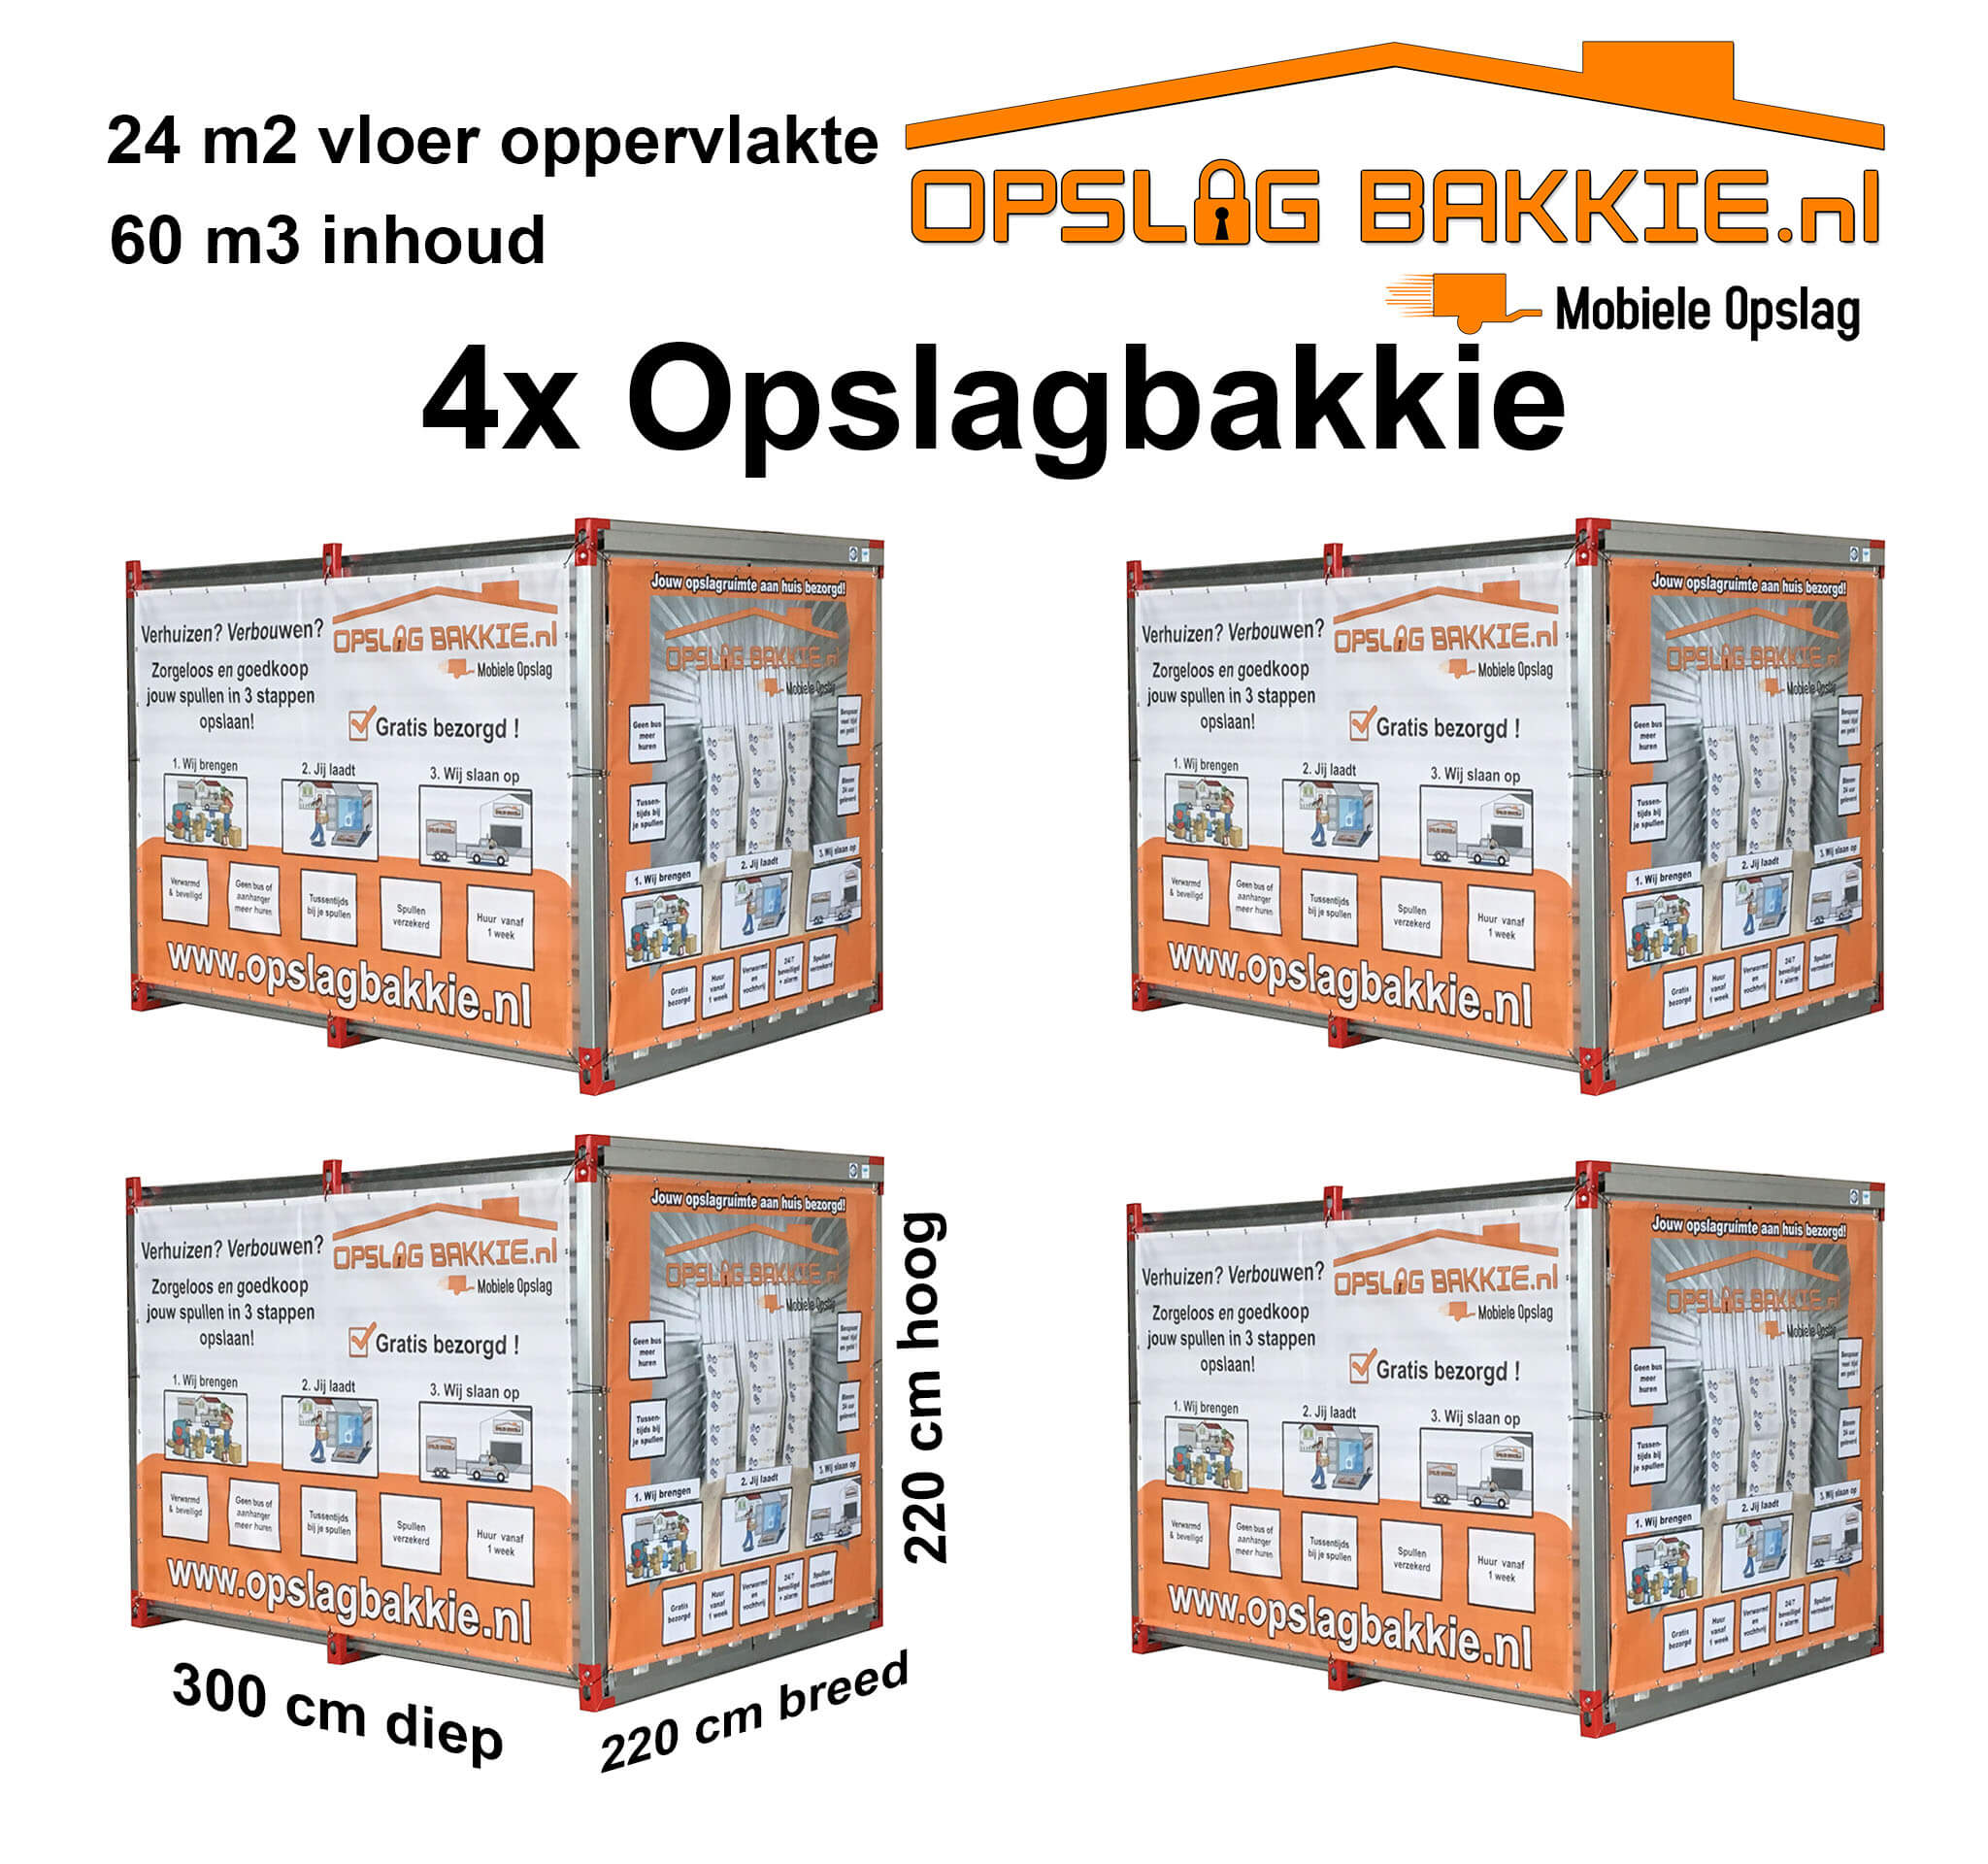 cement reputatie Westers 4x Opslagbakkie 24m2 in opslag - Opslagbakkie.nl